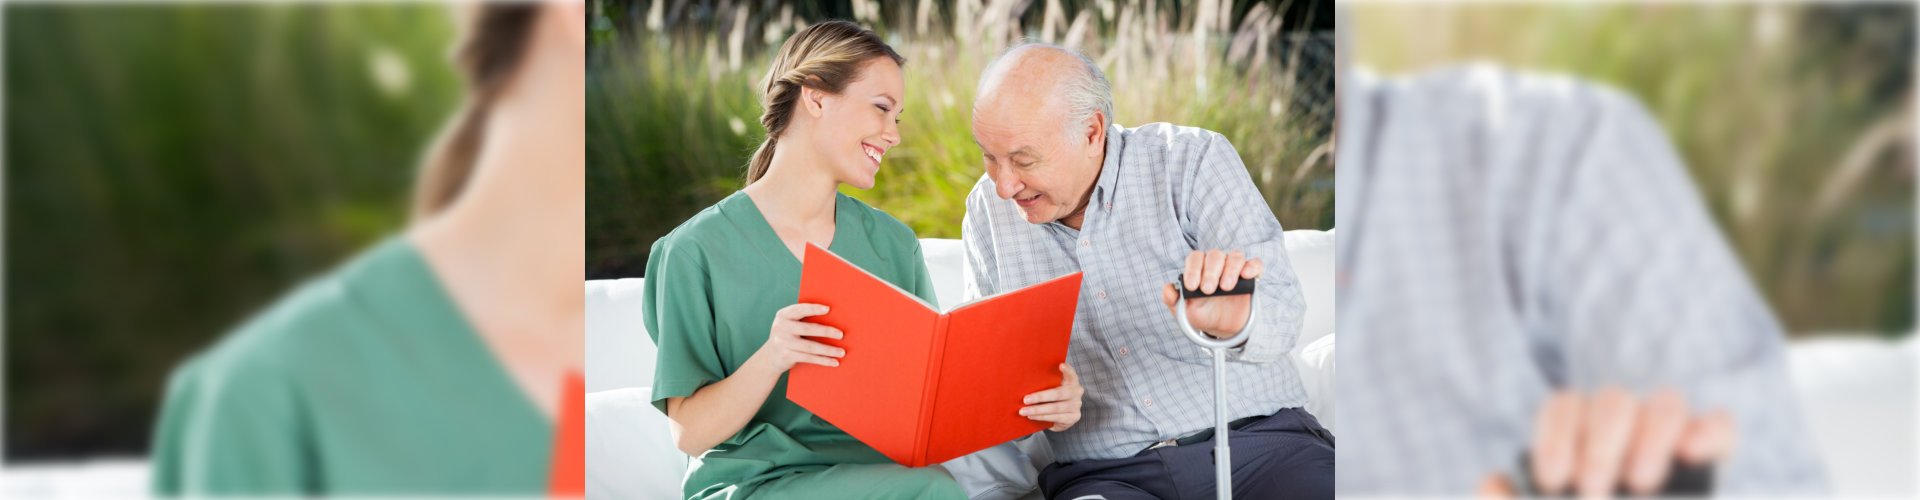 caregiver showing book to senior